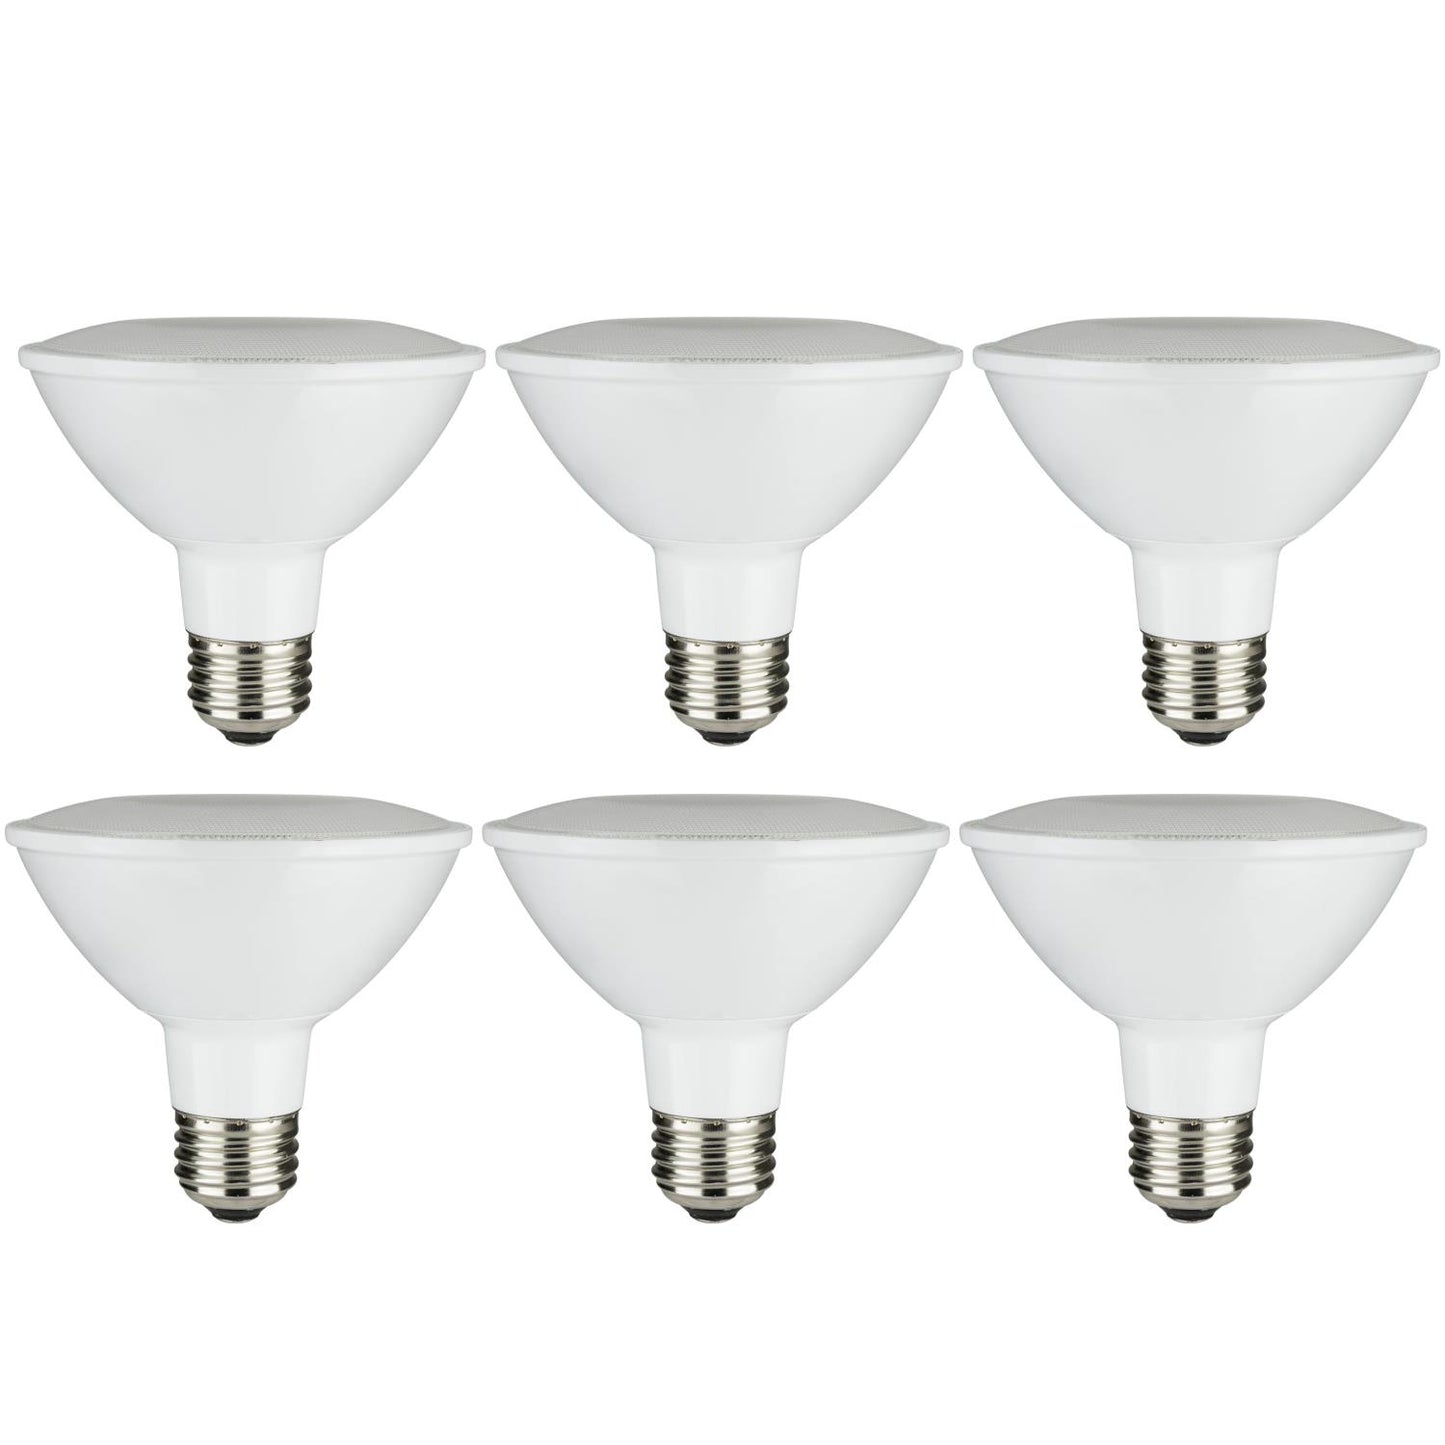 Sunlite LED PAR30 Reflector 10.5W (60W Equivalent) Light Bulb Medium (E26) Base, Super White